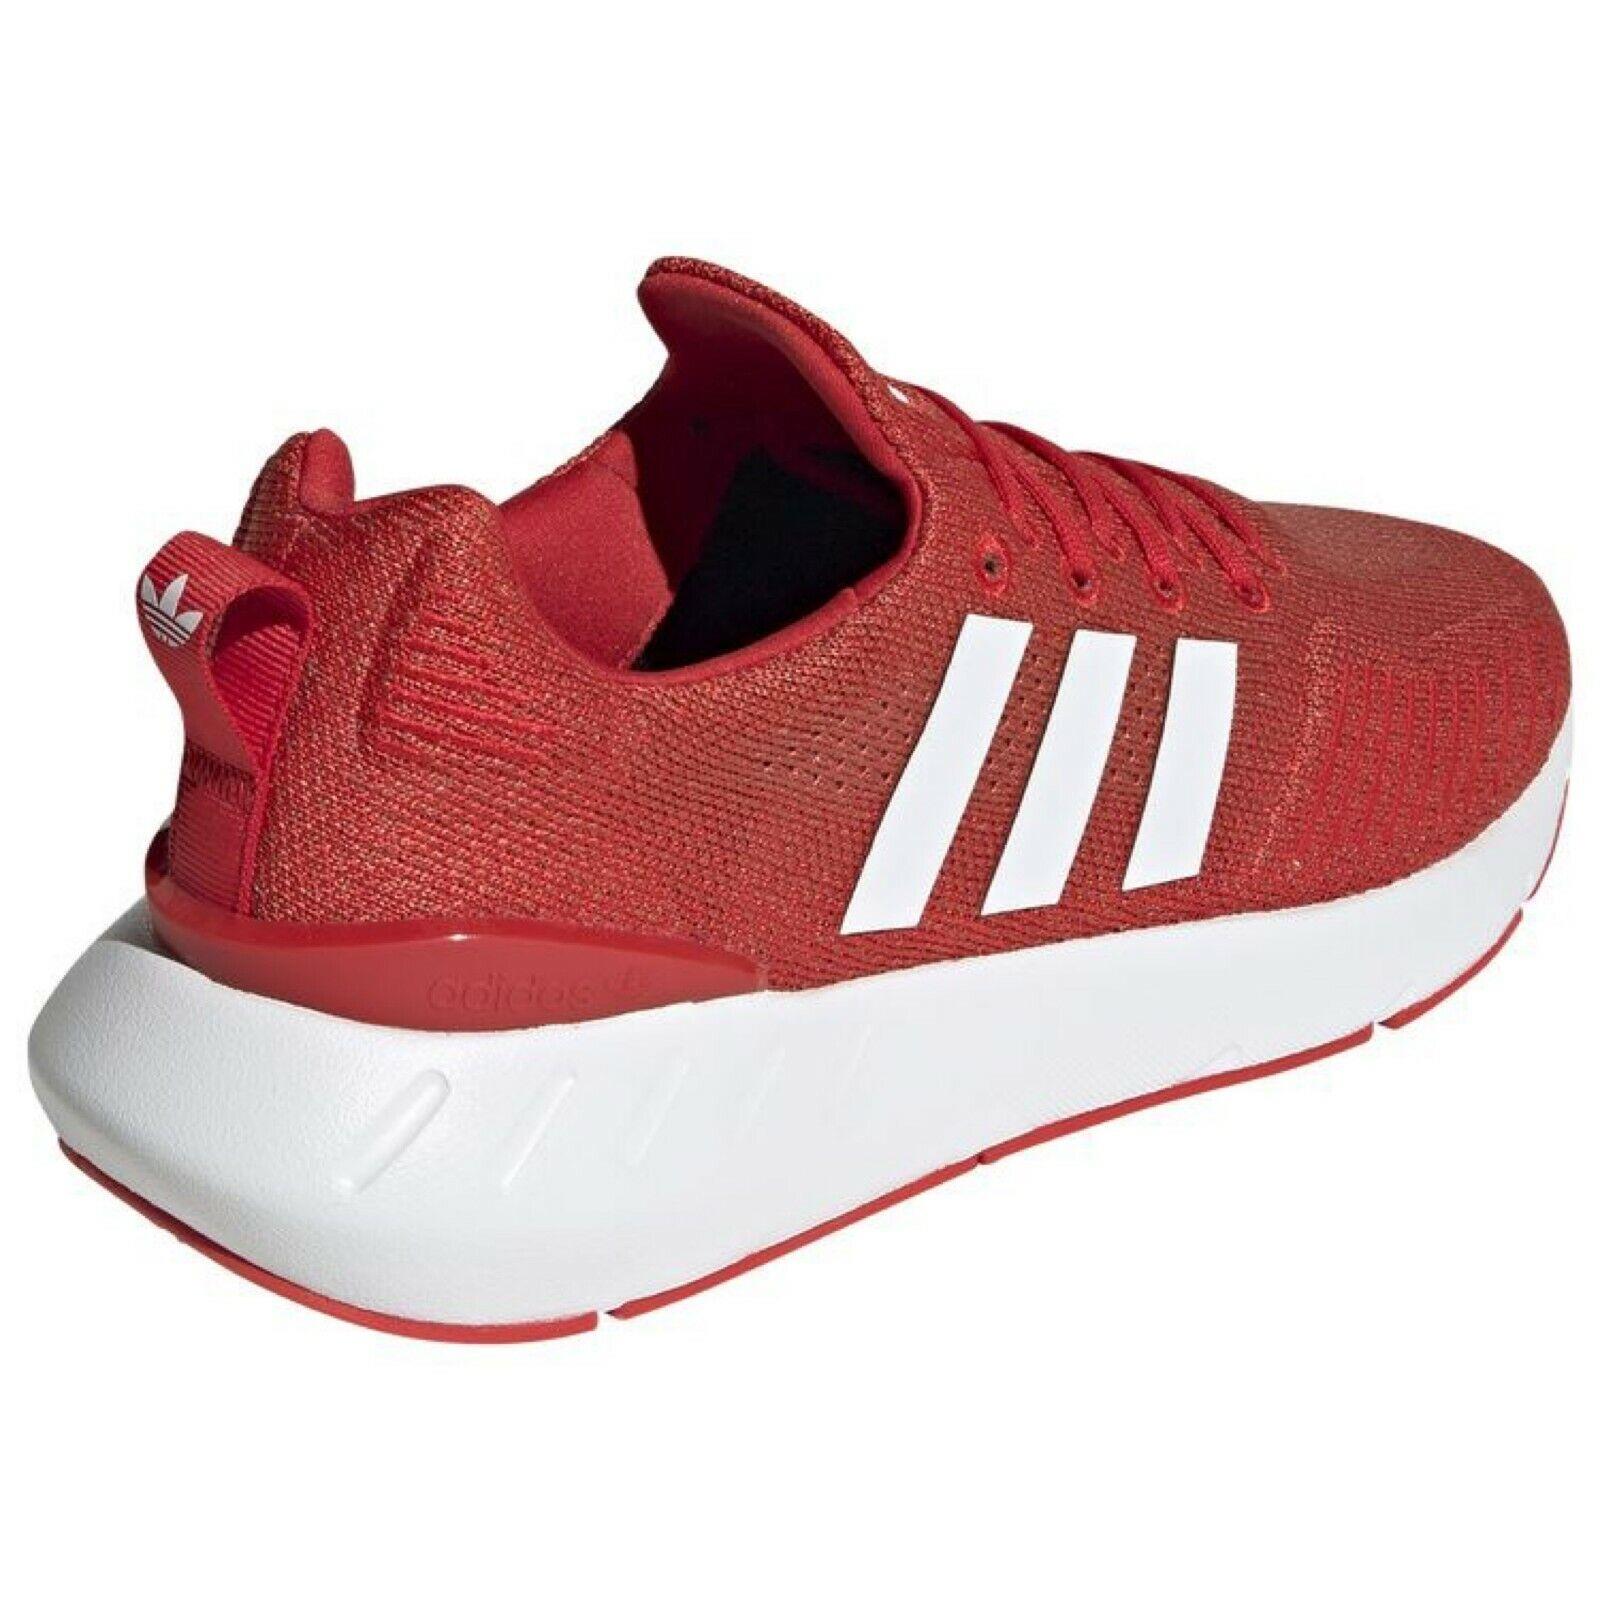 Adidas shoes Originals Swift Run - Red , Red/Black Manufacturer 9